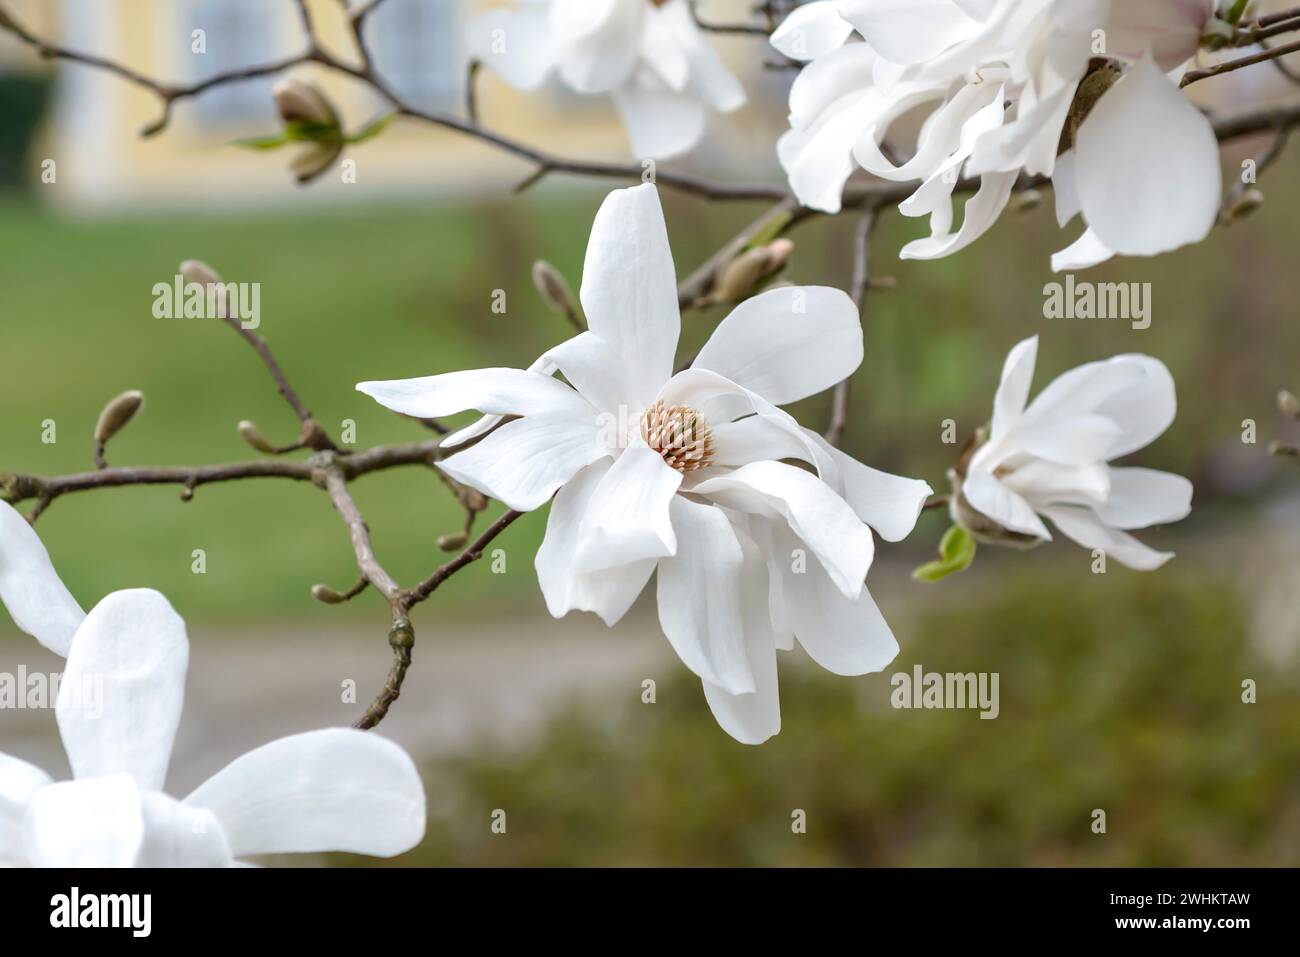 Loebner's magnolia (Magnolia x loebneri 'Merrill'), HBLFA Vienna-Schoenbrunn, Federal Republic of Germany Stock Photo